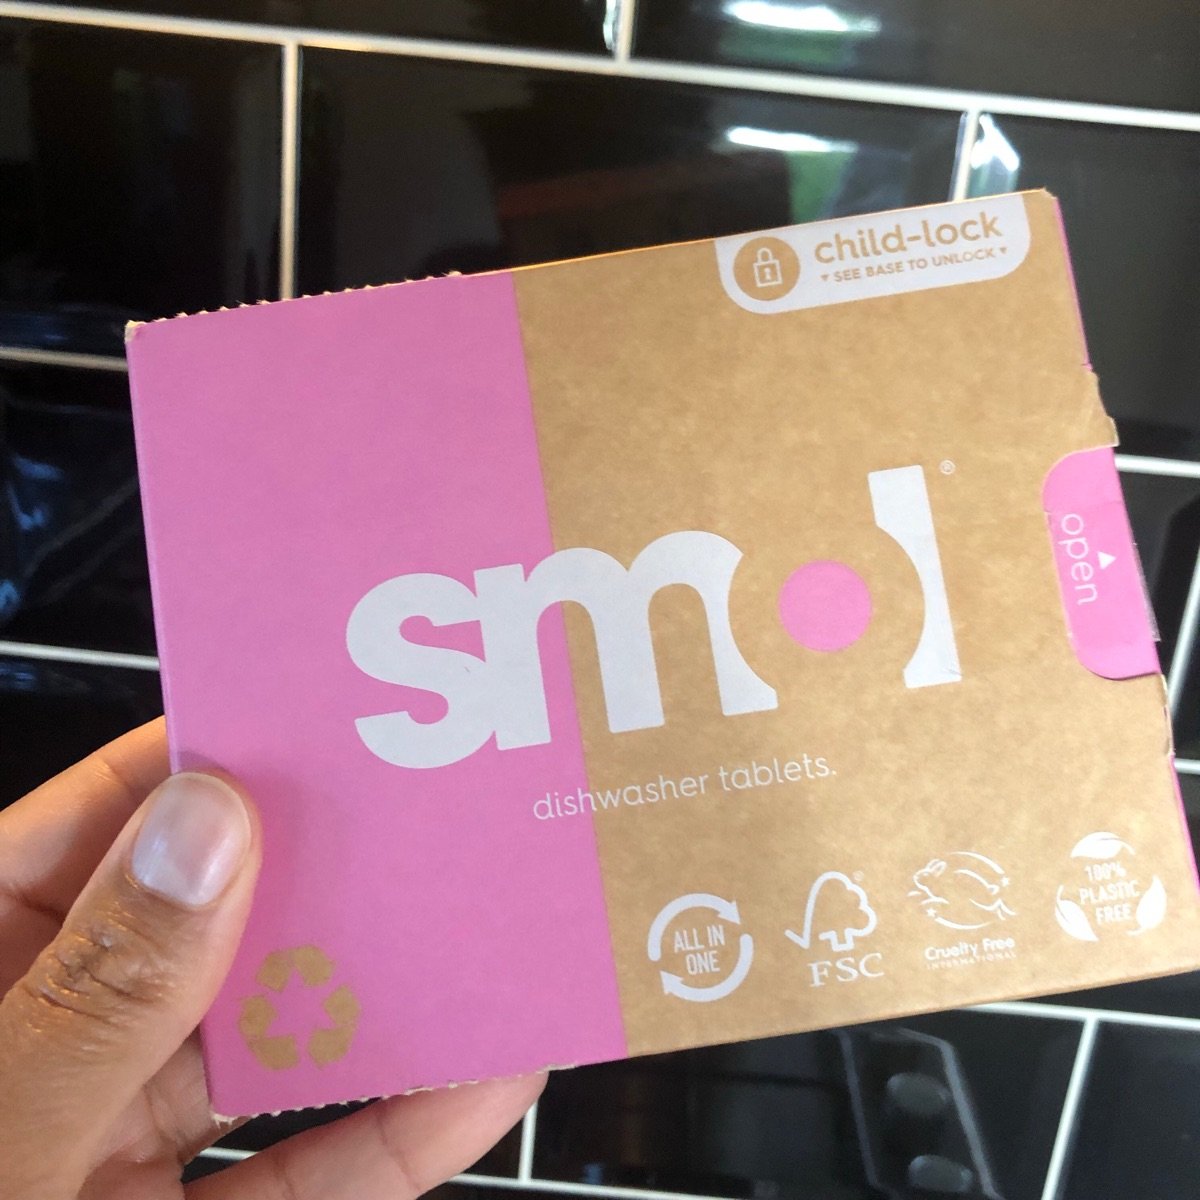 Smol Dishwasher Tablets Reviews | abillion